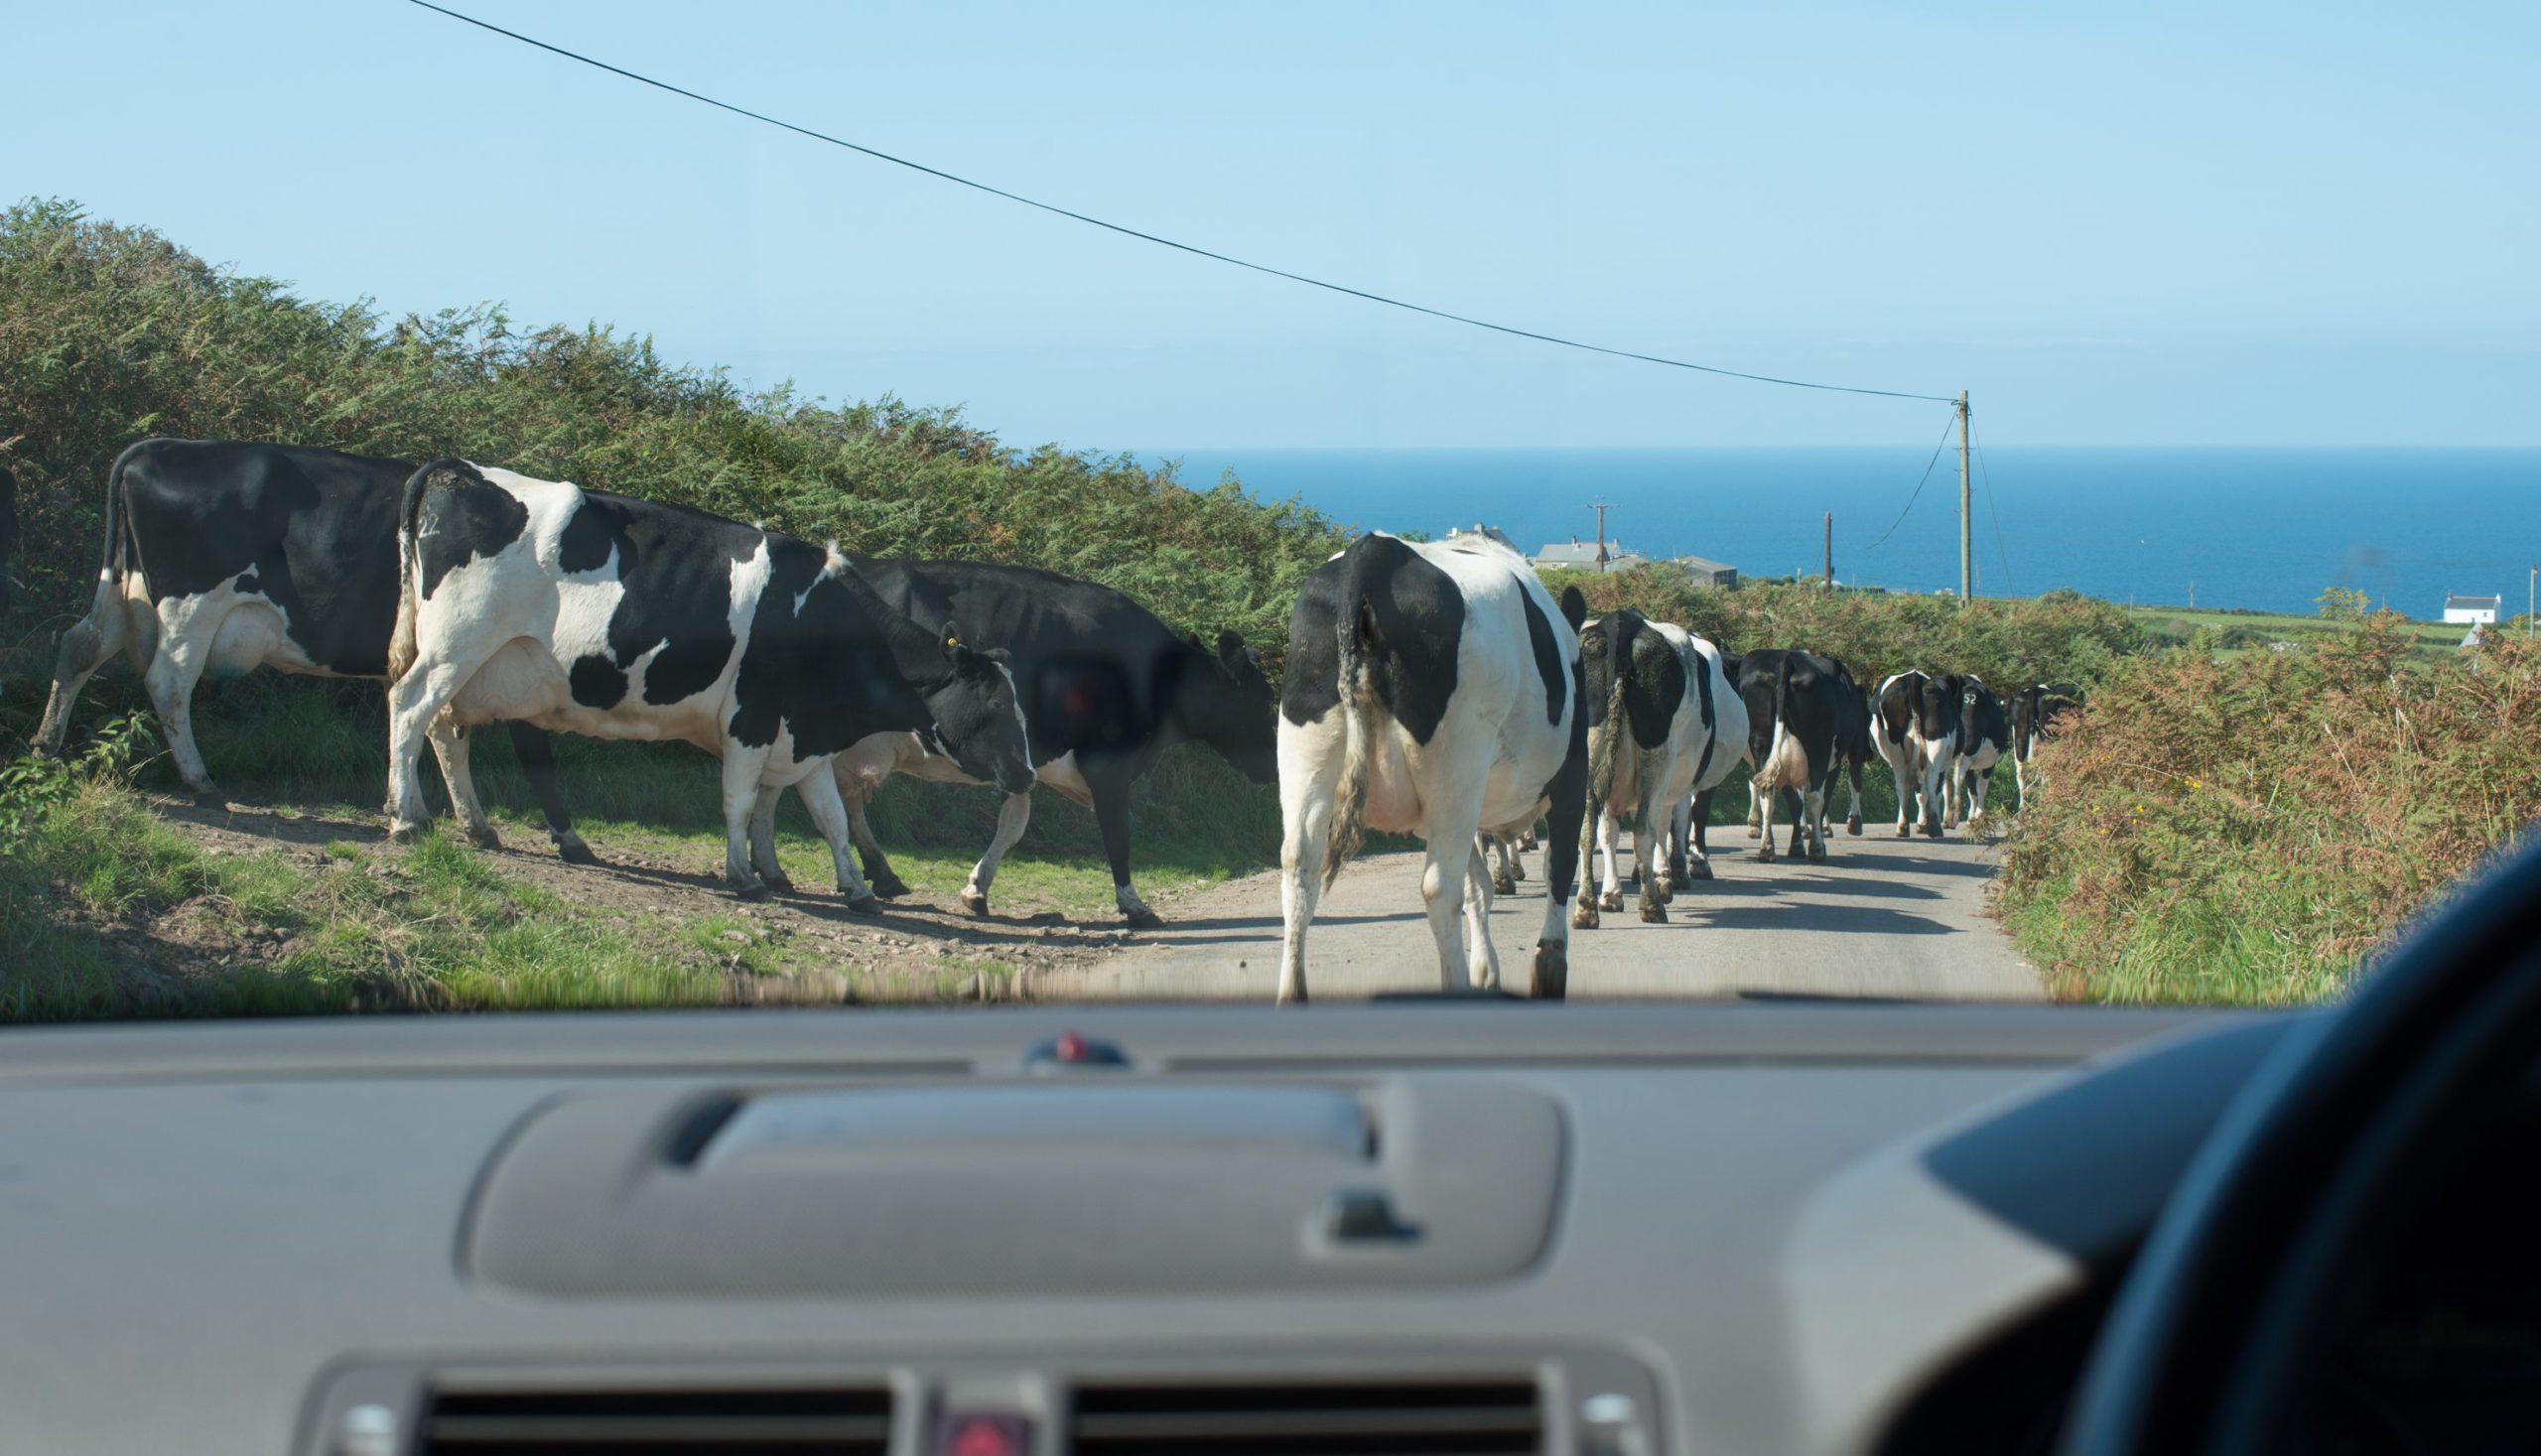 Cornish cows countryside